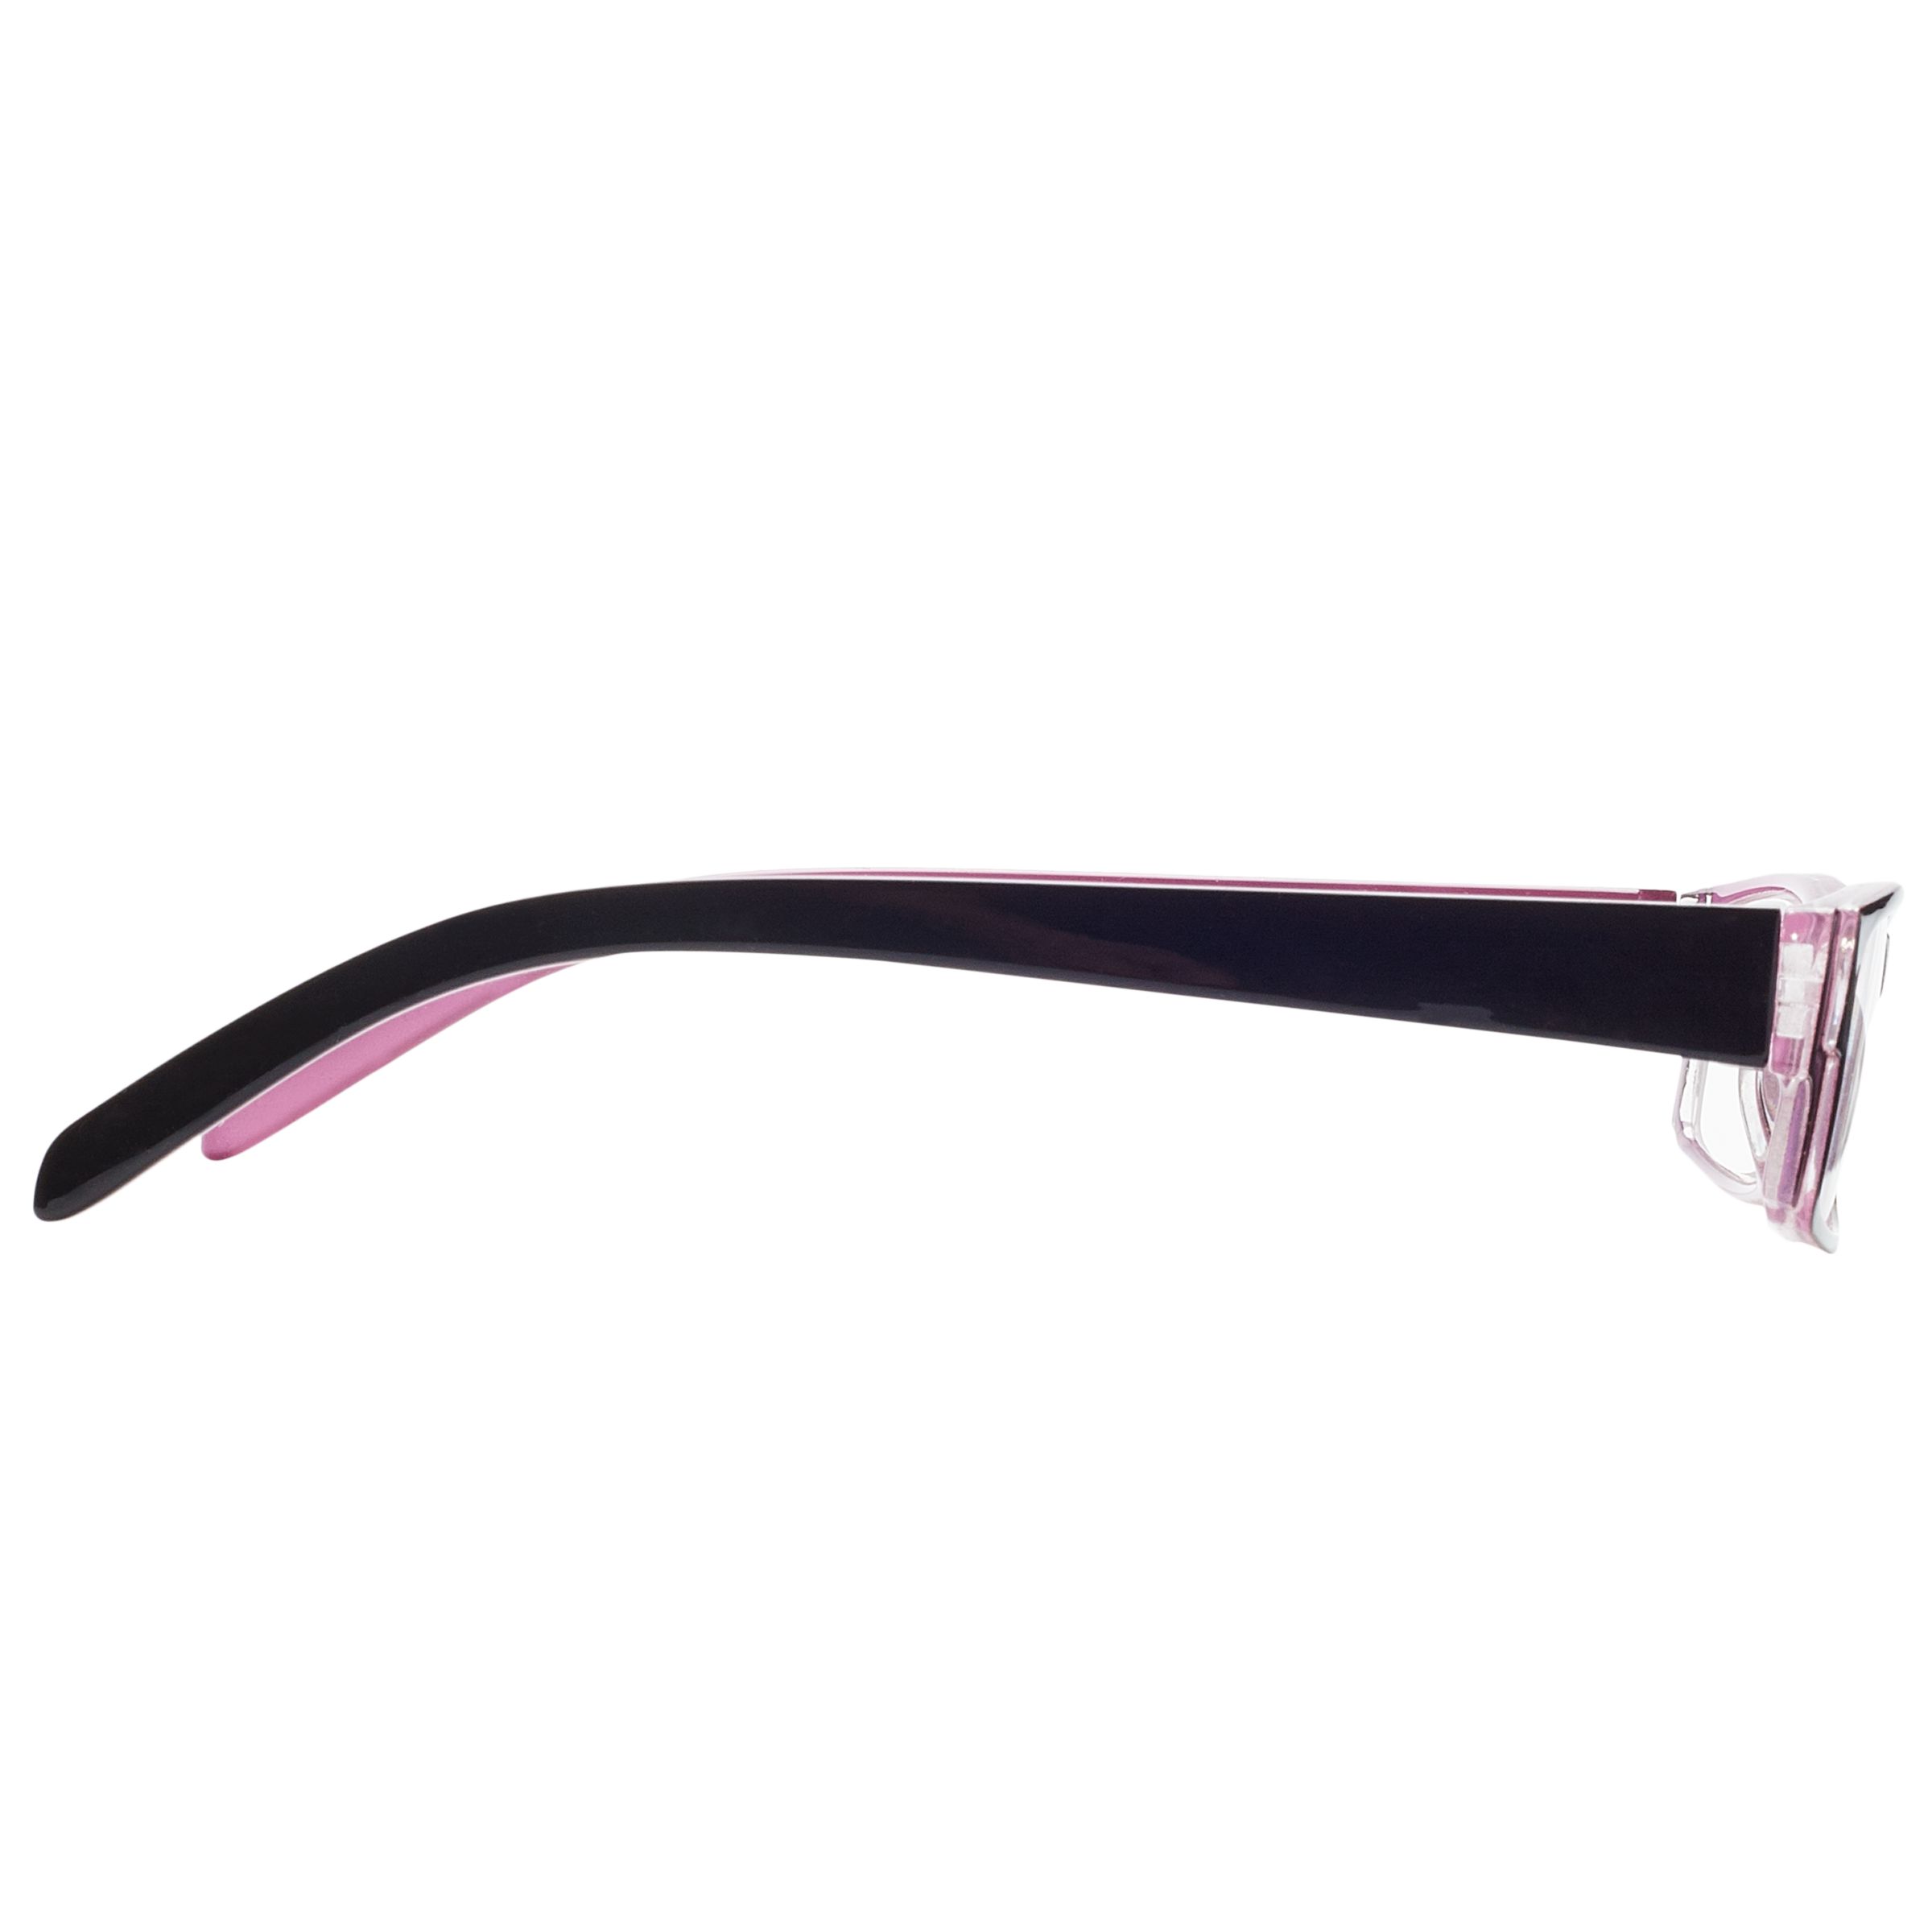 Buy Magnif Eyes Very Narrow Fit Ready Readers Carmel Glasses, Black/Rose Online at johnlewis.com